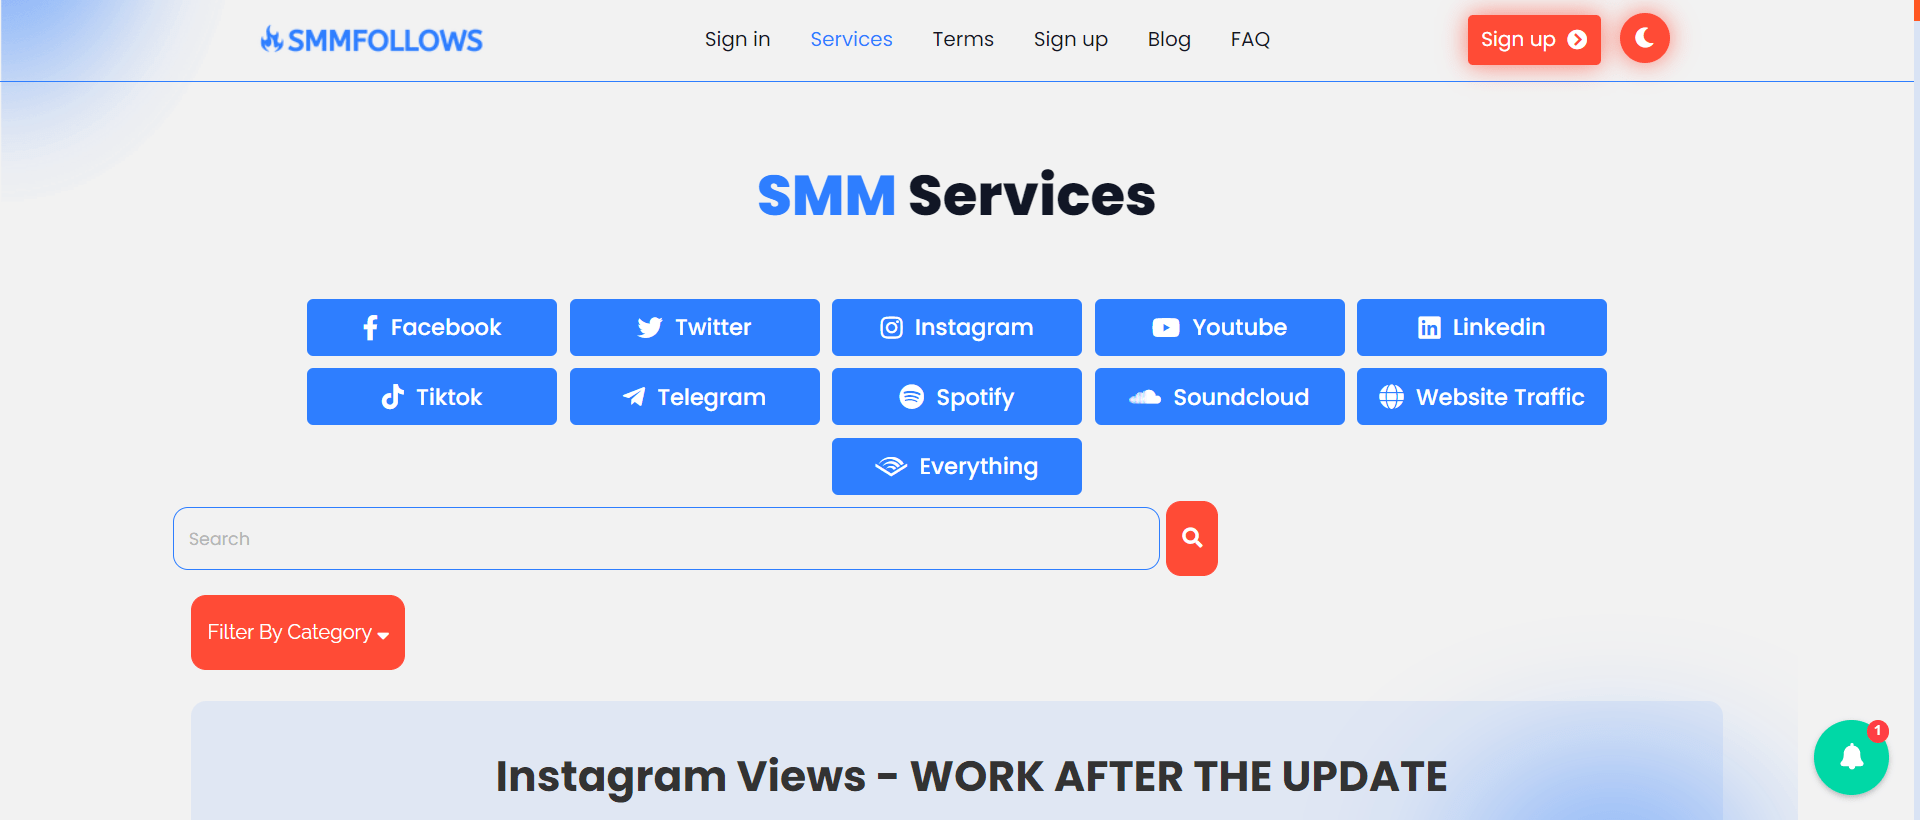 SMMFollows Review - Services